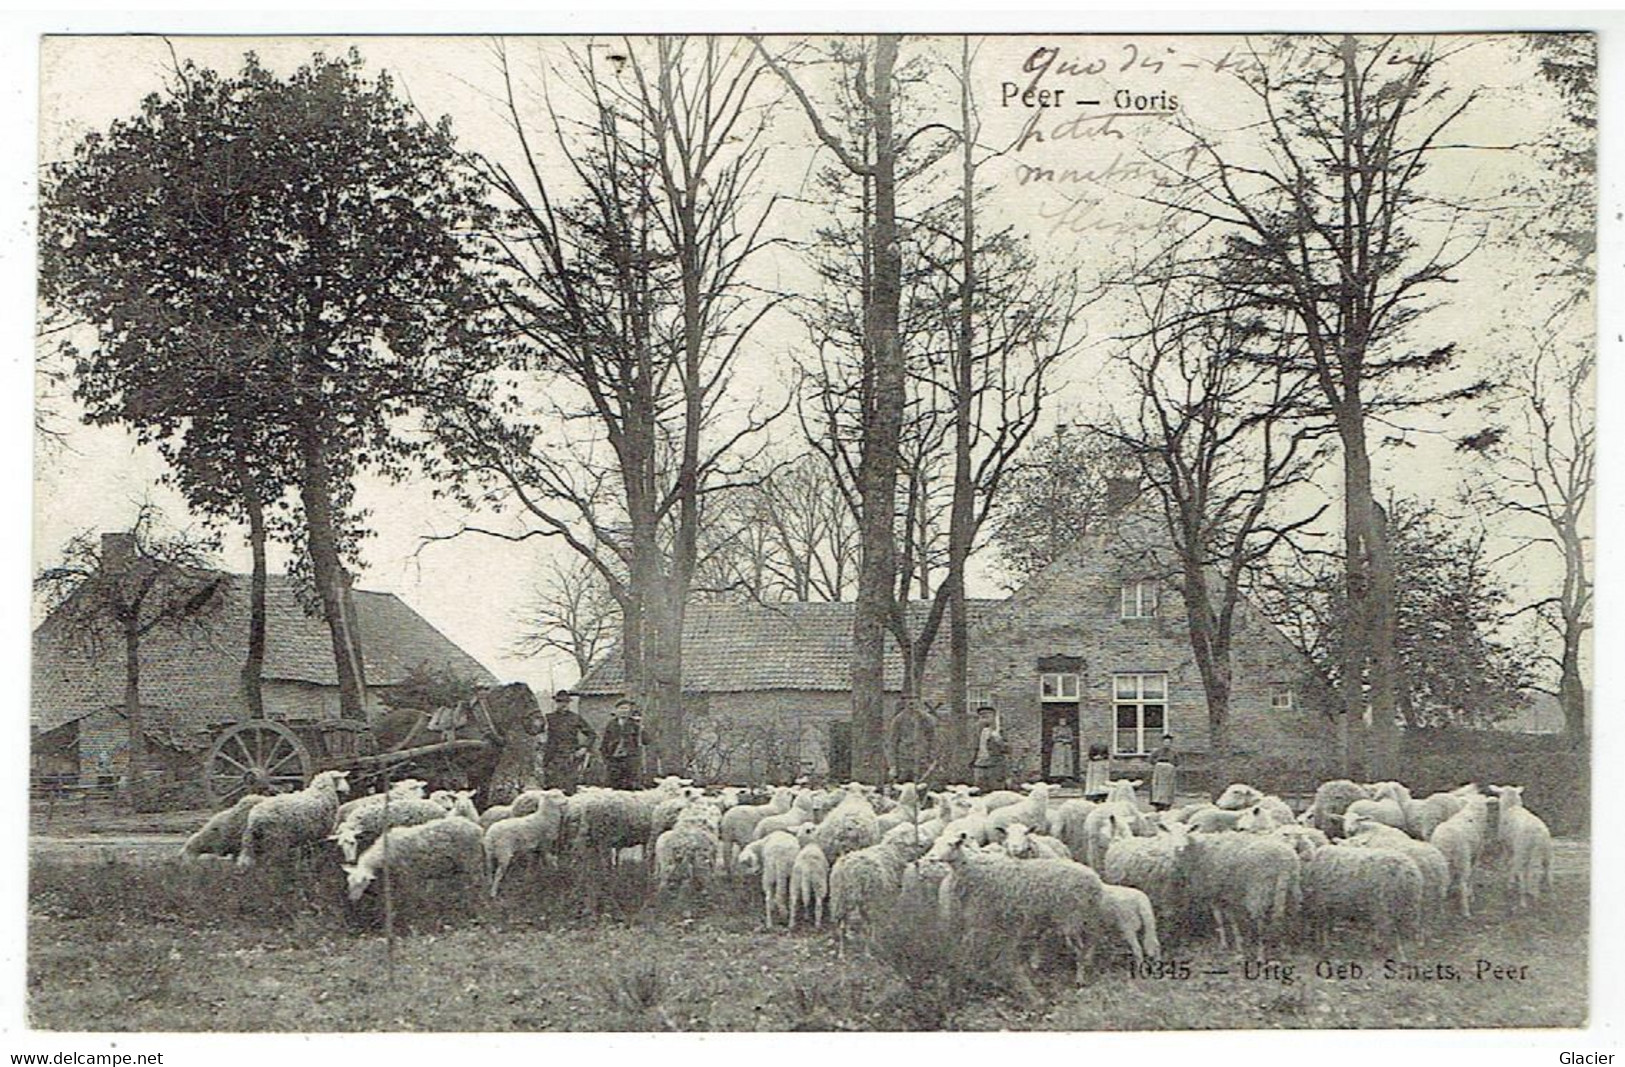 PEER - Goris - Schapen - Moutons - N° 10345 UItg. Beb. Smets - Peer